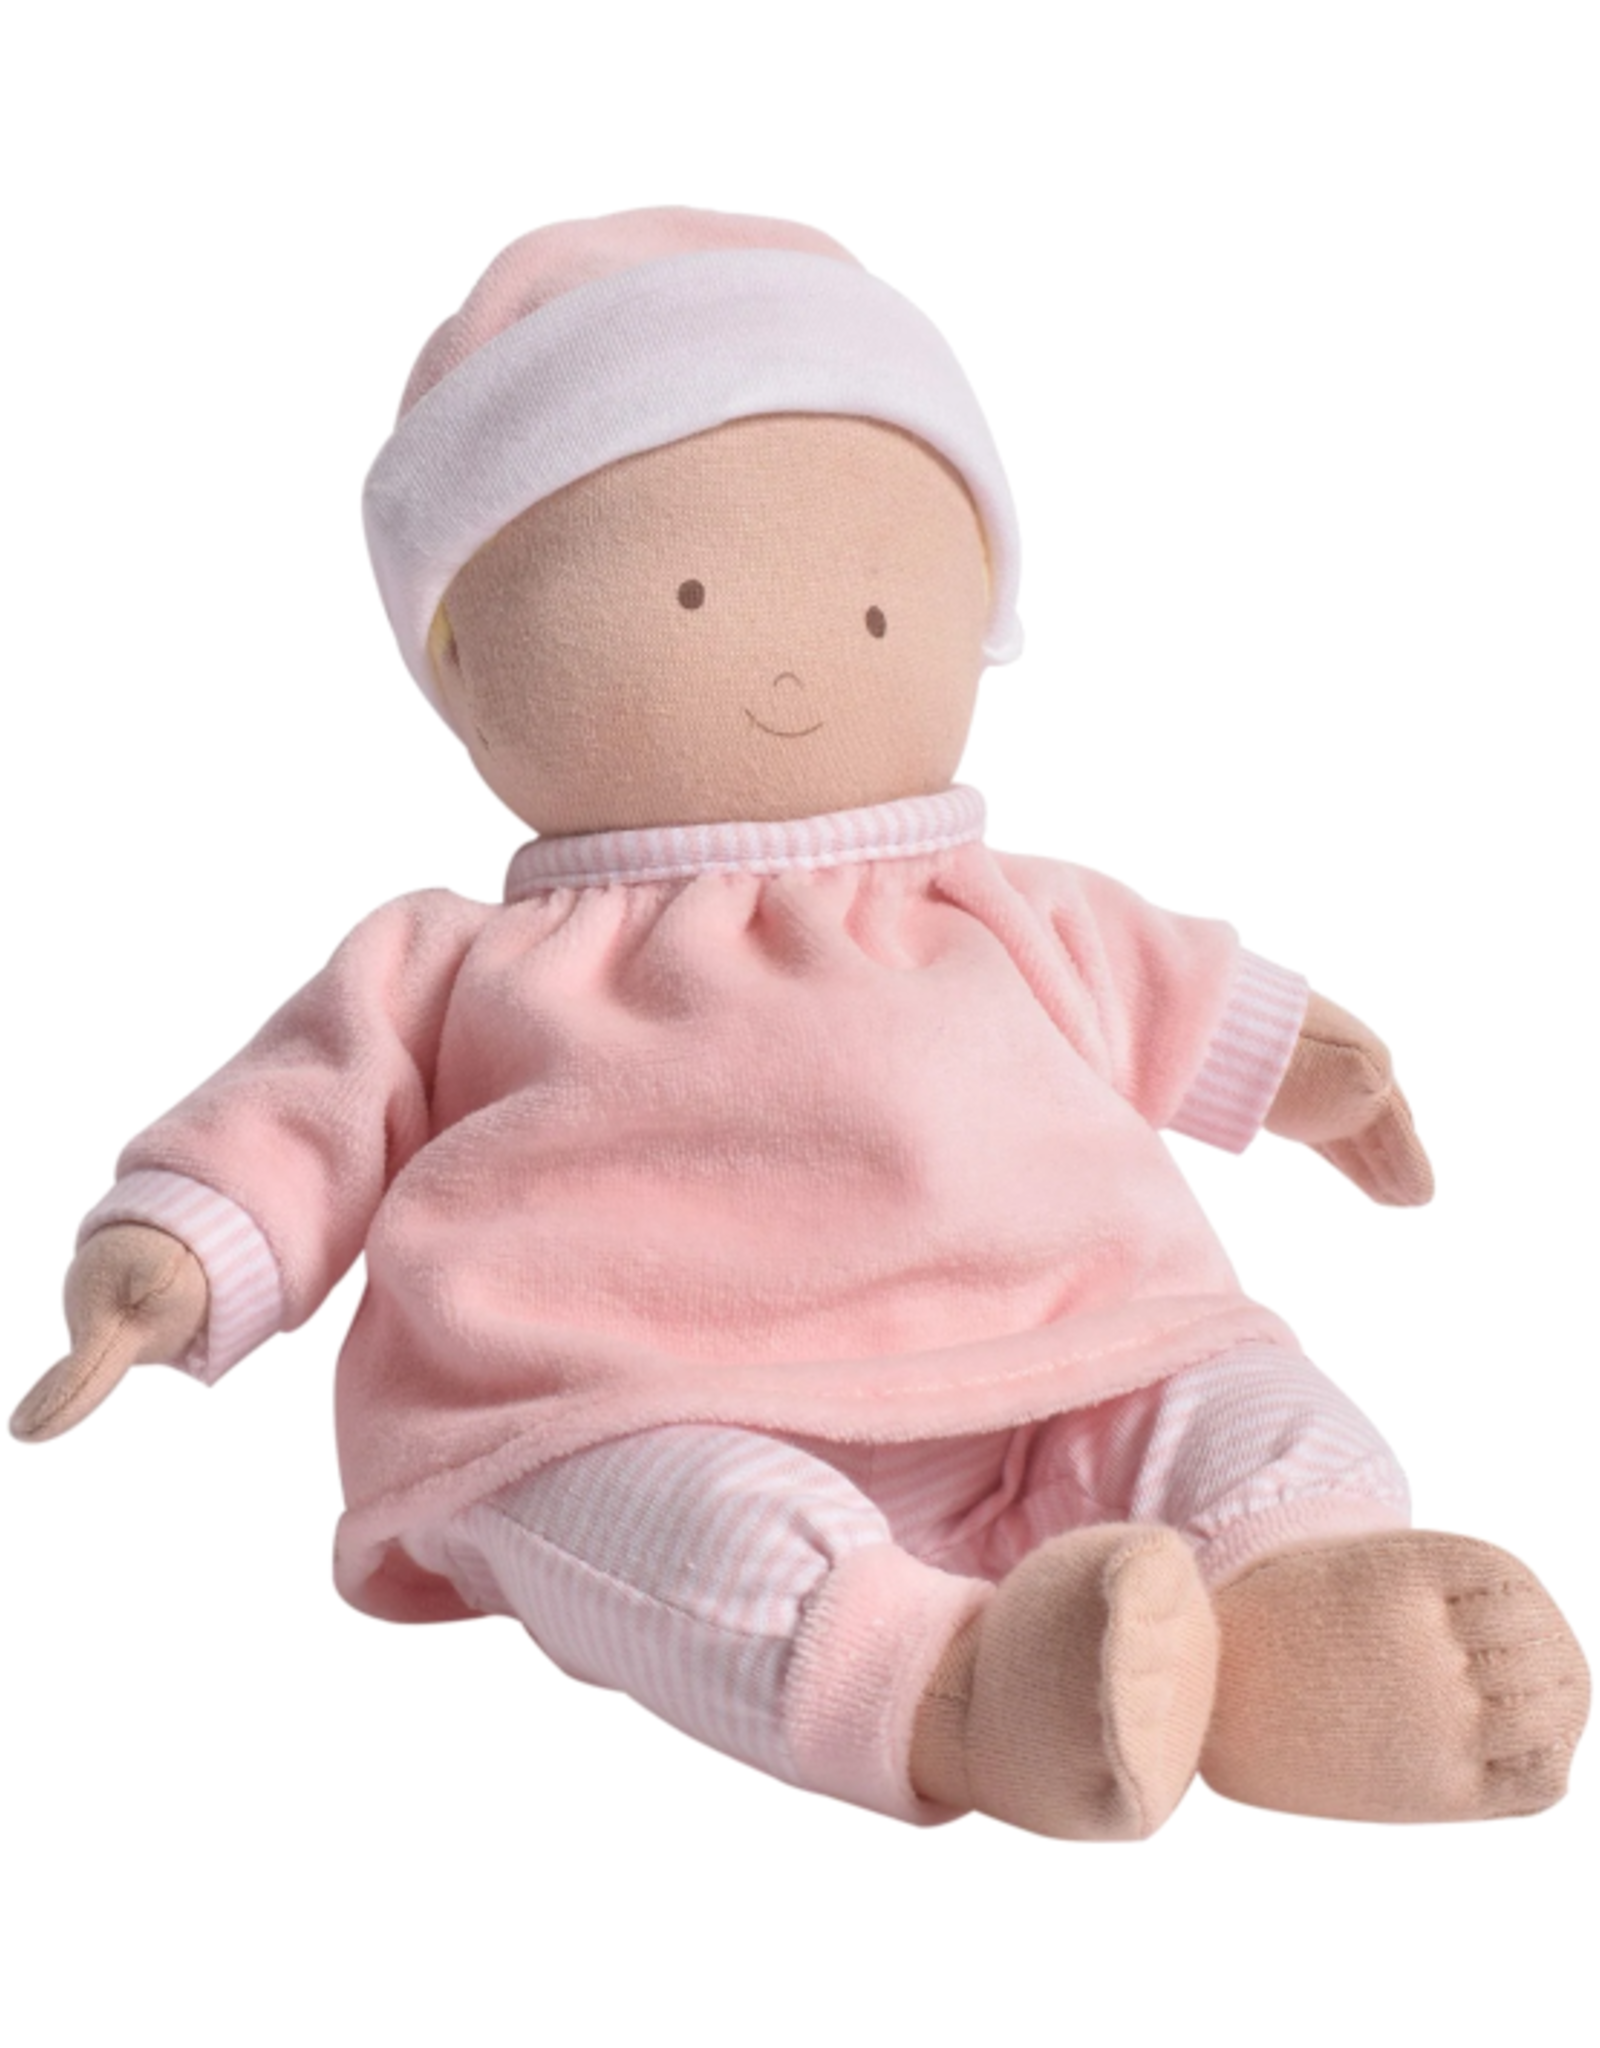 Tikiri Toys Tikiri Toys - Cherub Baby in Pink Dress